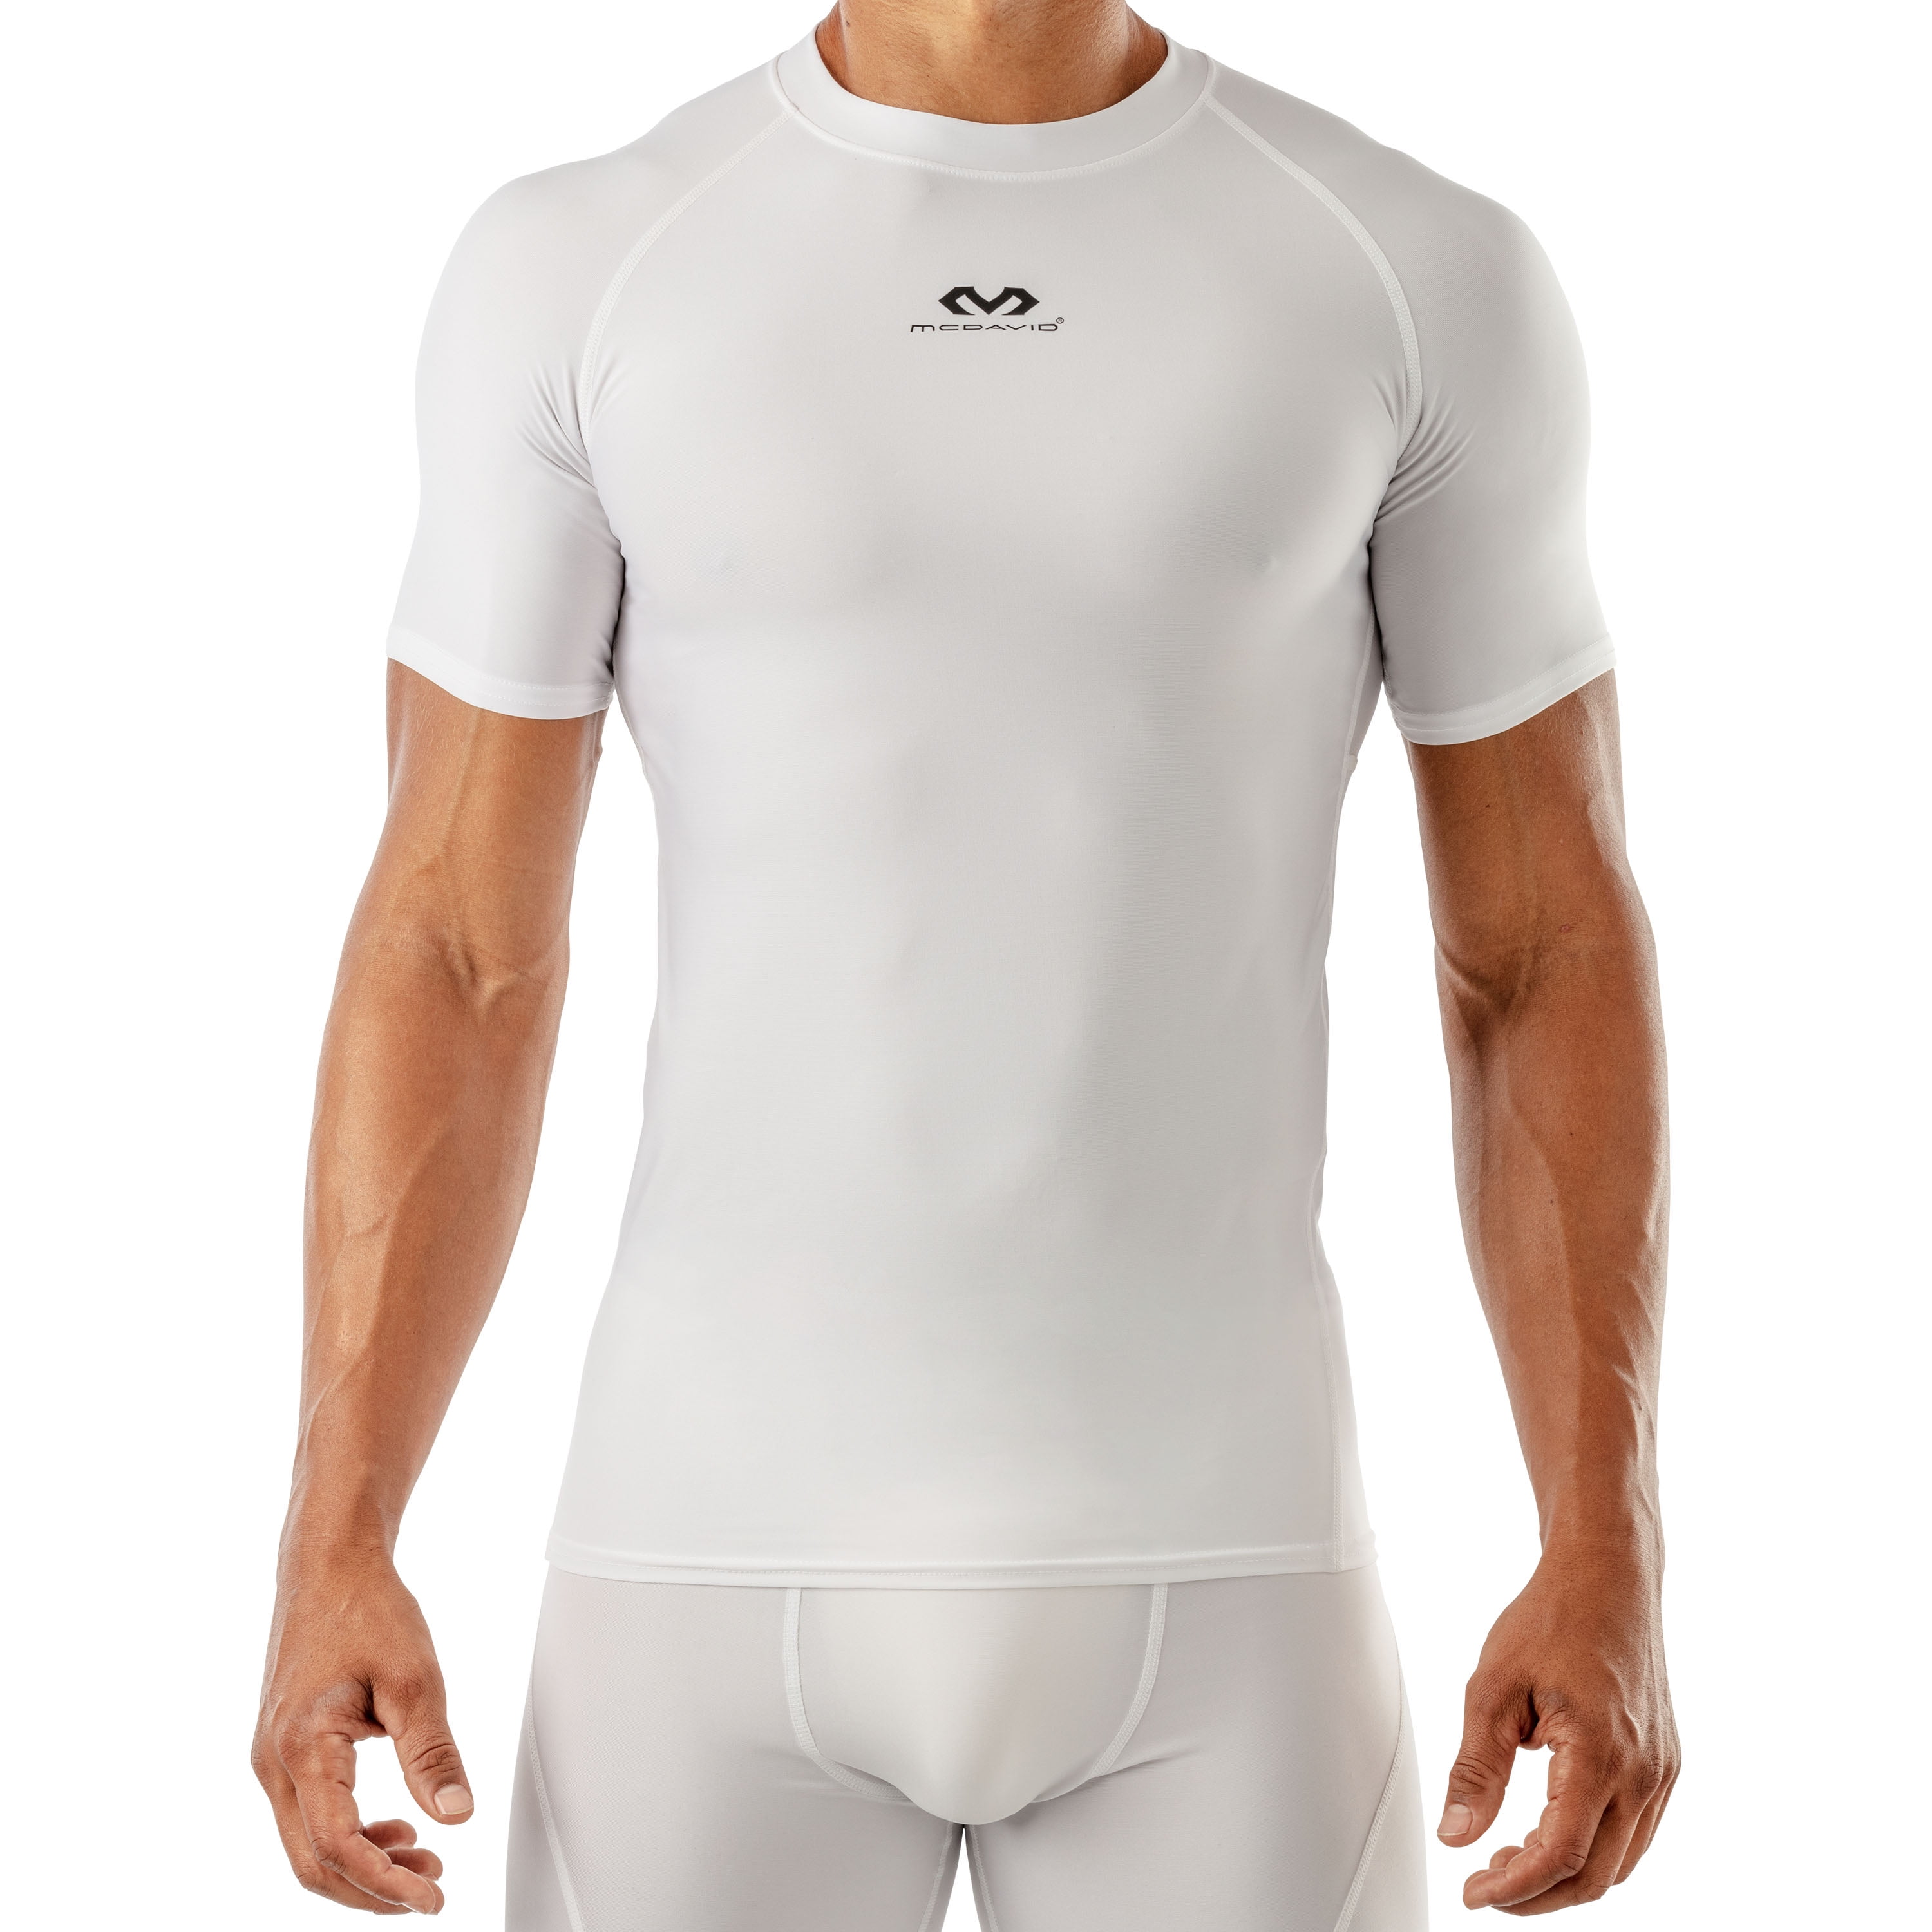 McDavid Sport Shirt With Short Sleeves, White, Adult Large Walmart.com